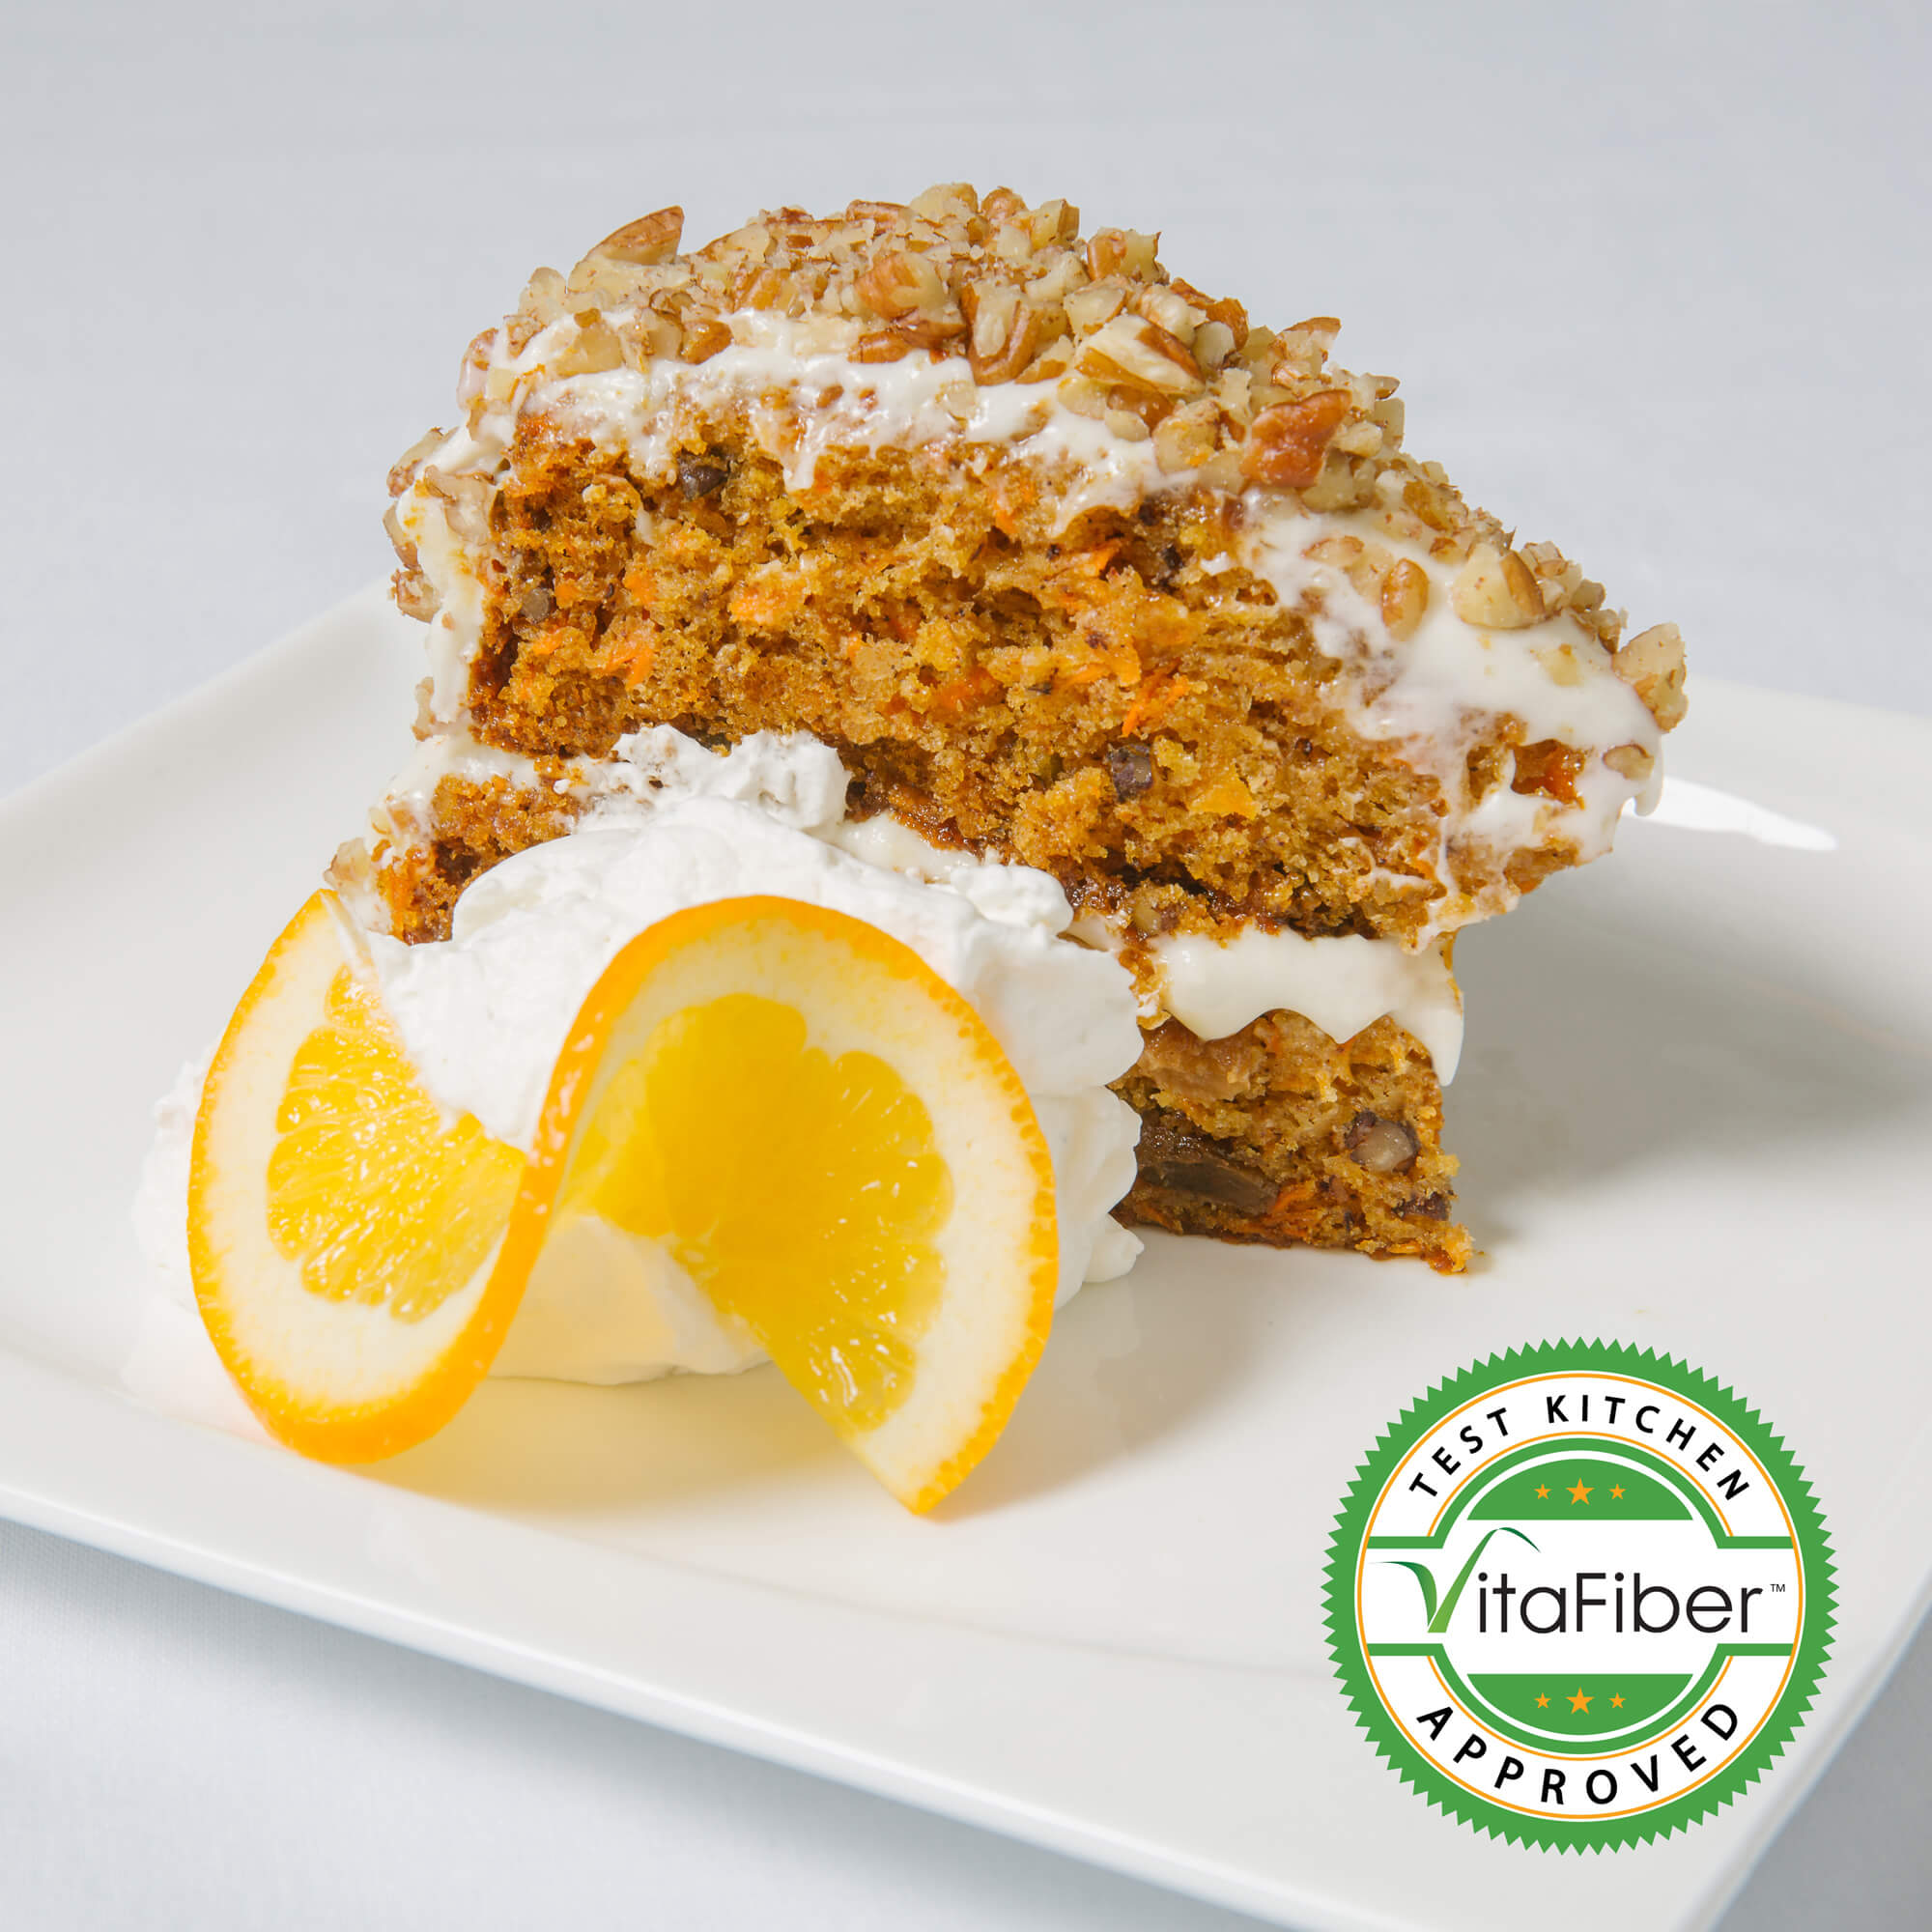 VitaFiber Carrot Cake